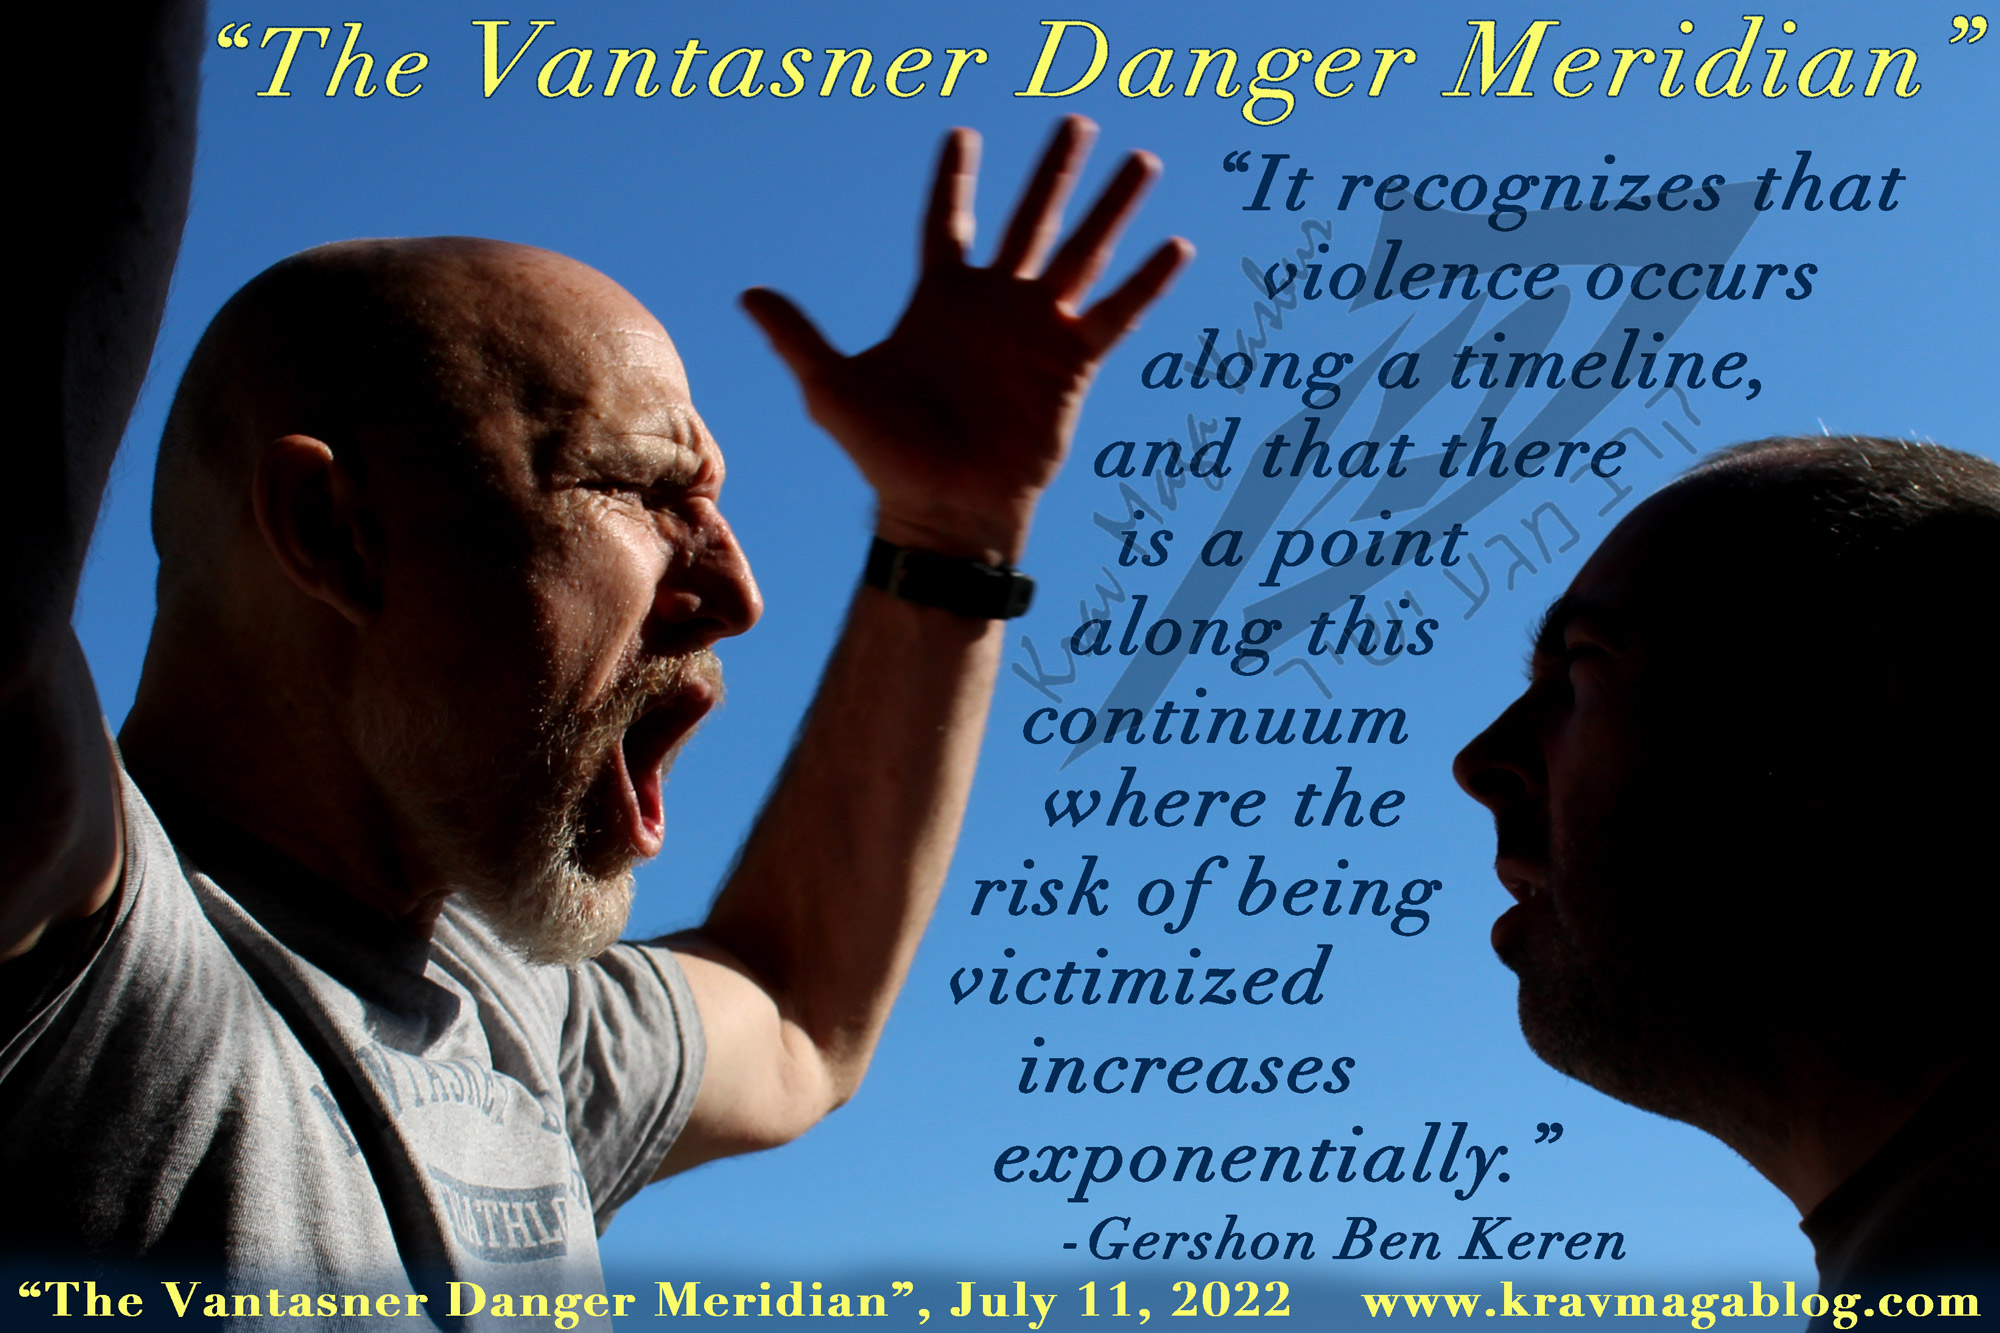 The Vantasner Danger Meridian